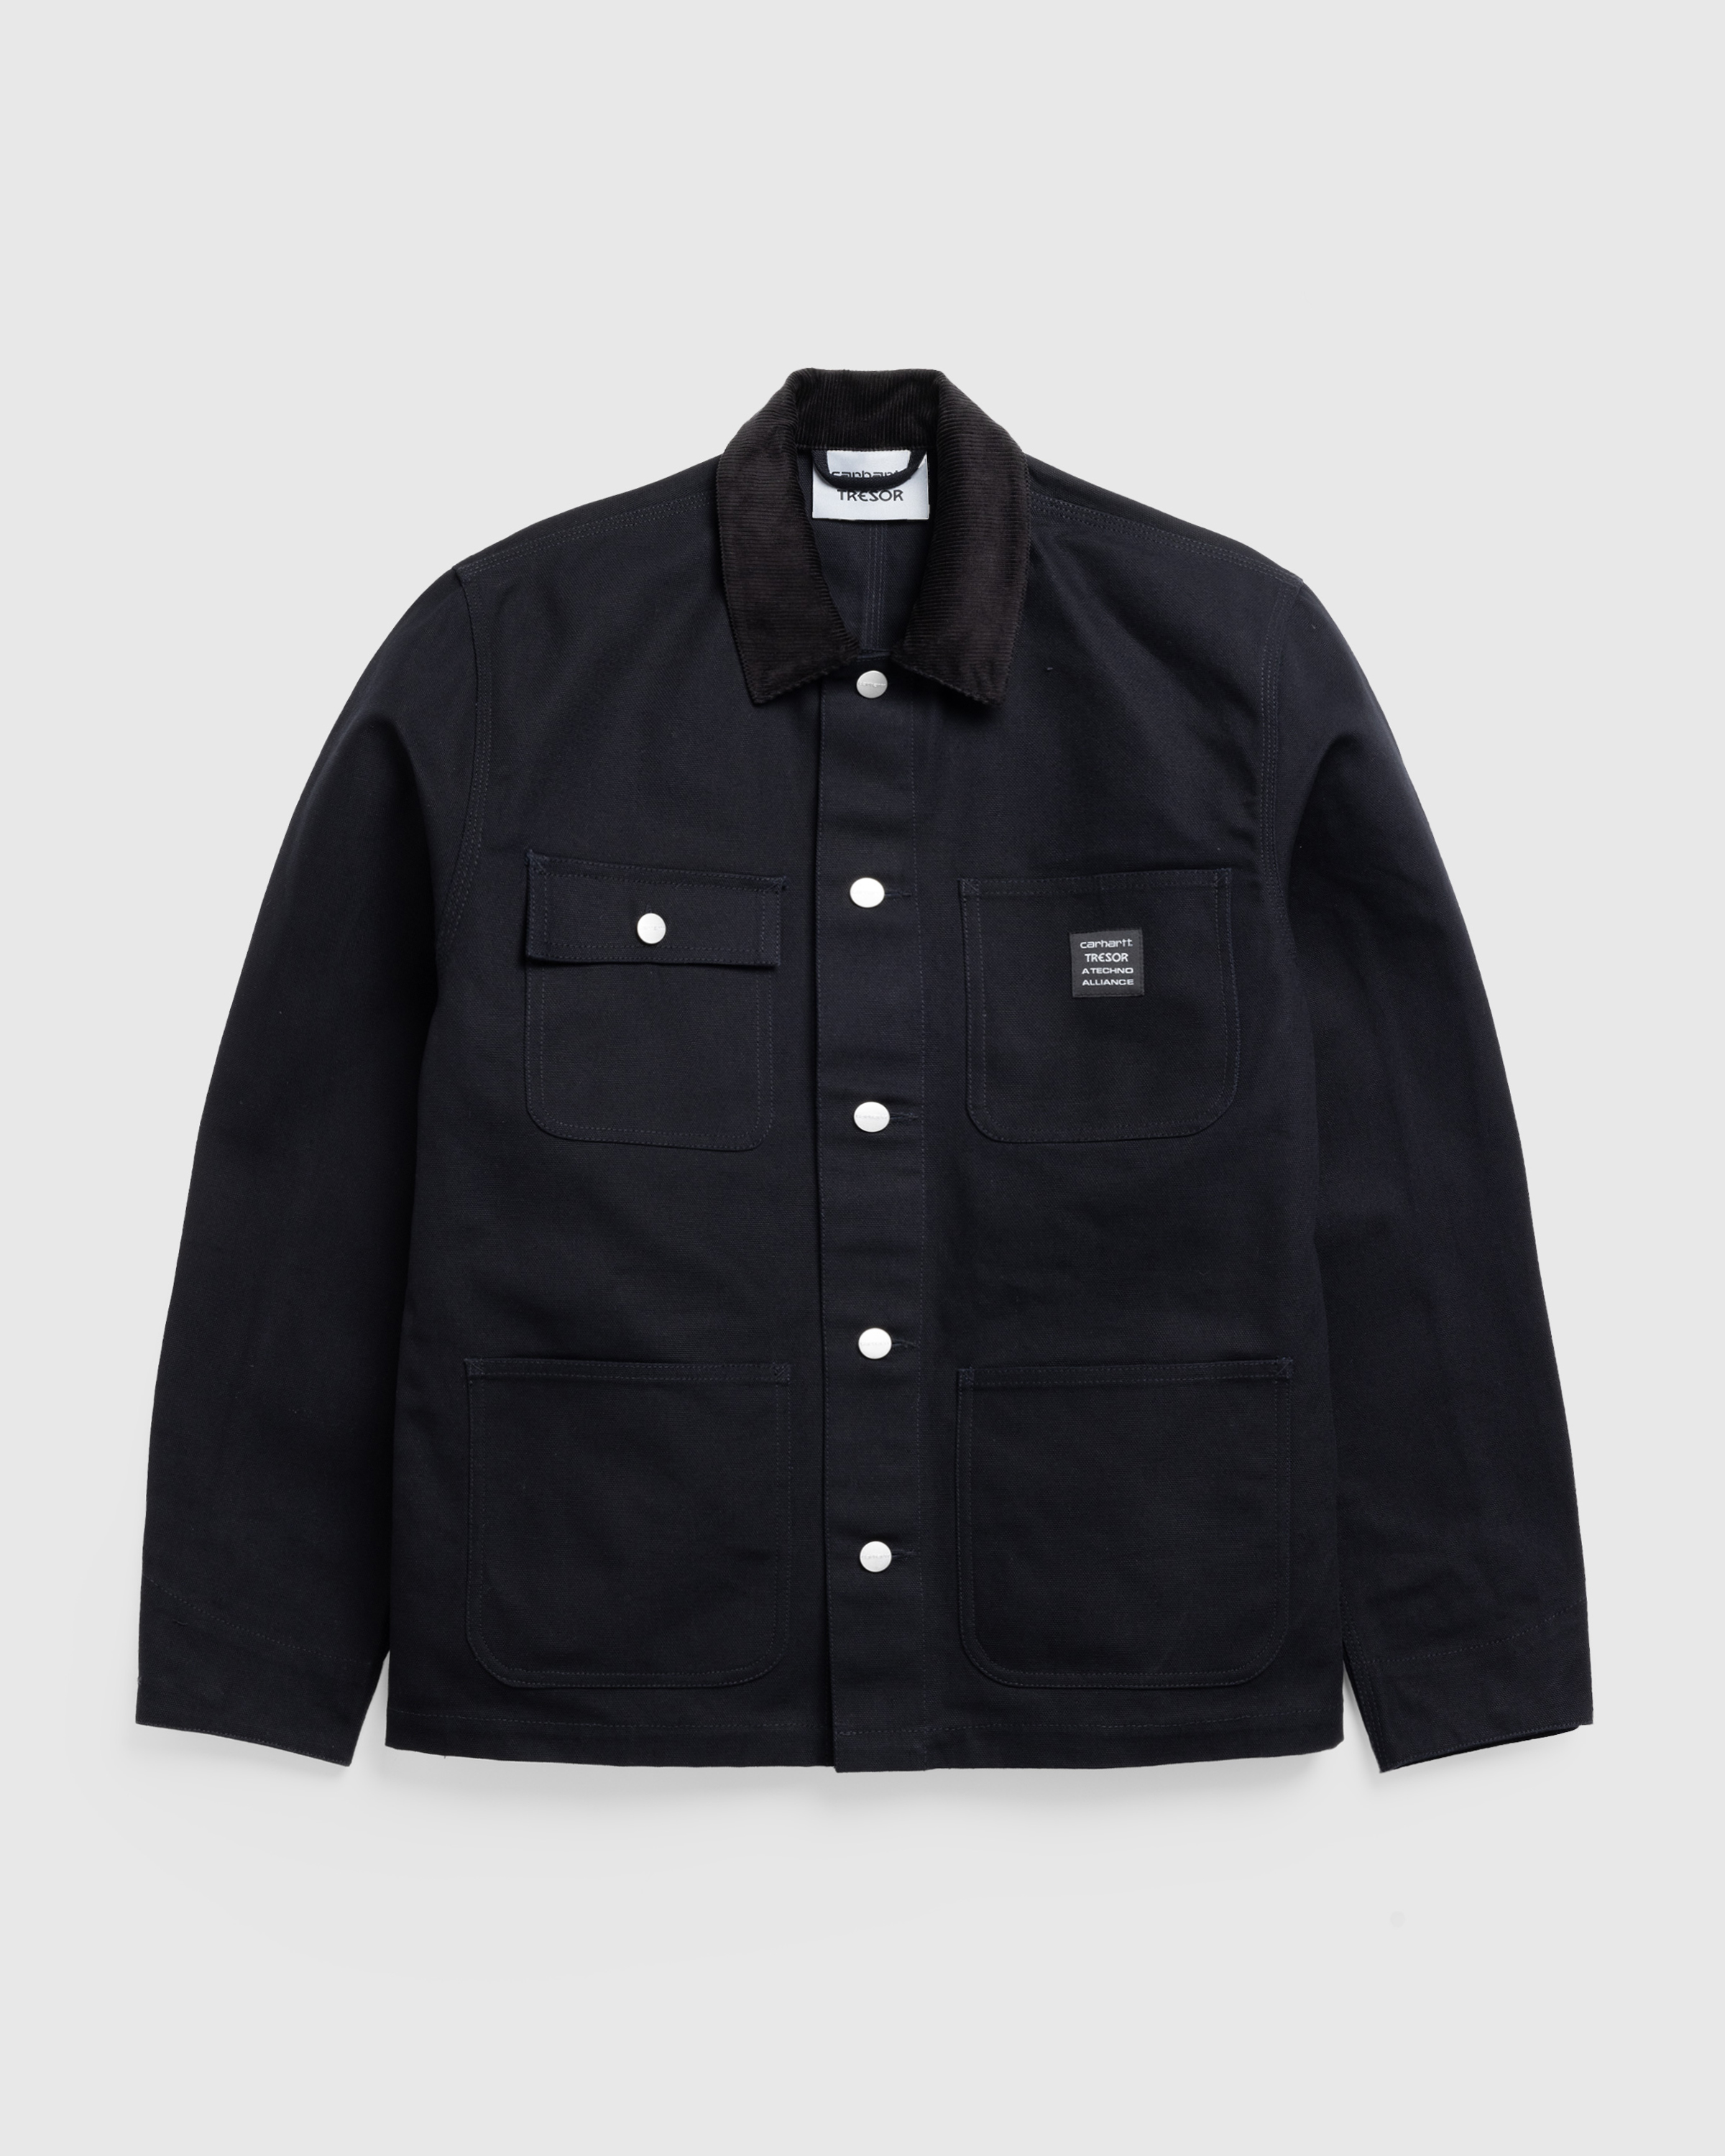 Carhartt WIP x Tresor – Way Of The Light Michigan Coat Black/Dark Grey Reflective - Outerwear - Black - Image 1